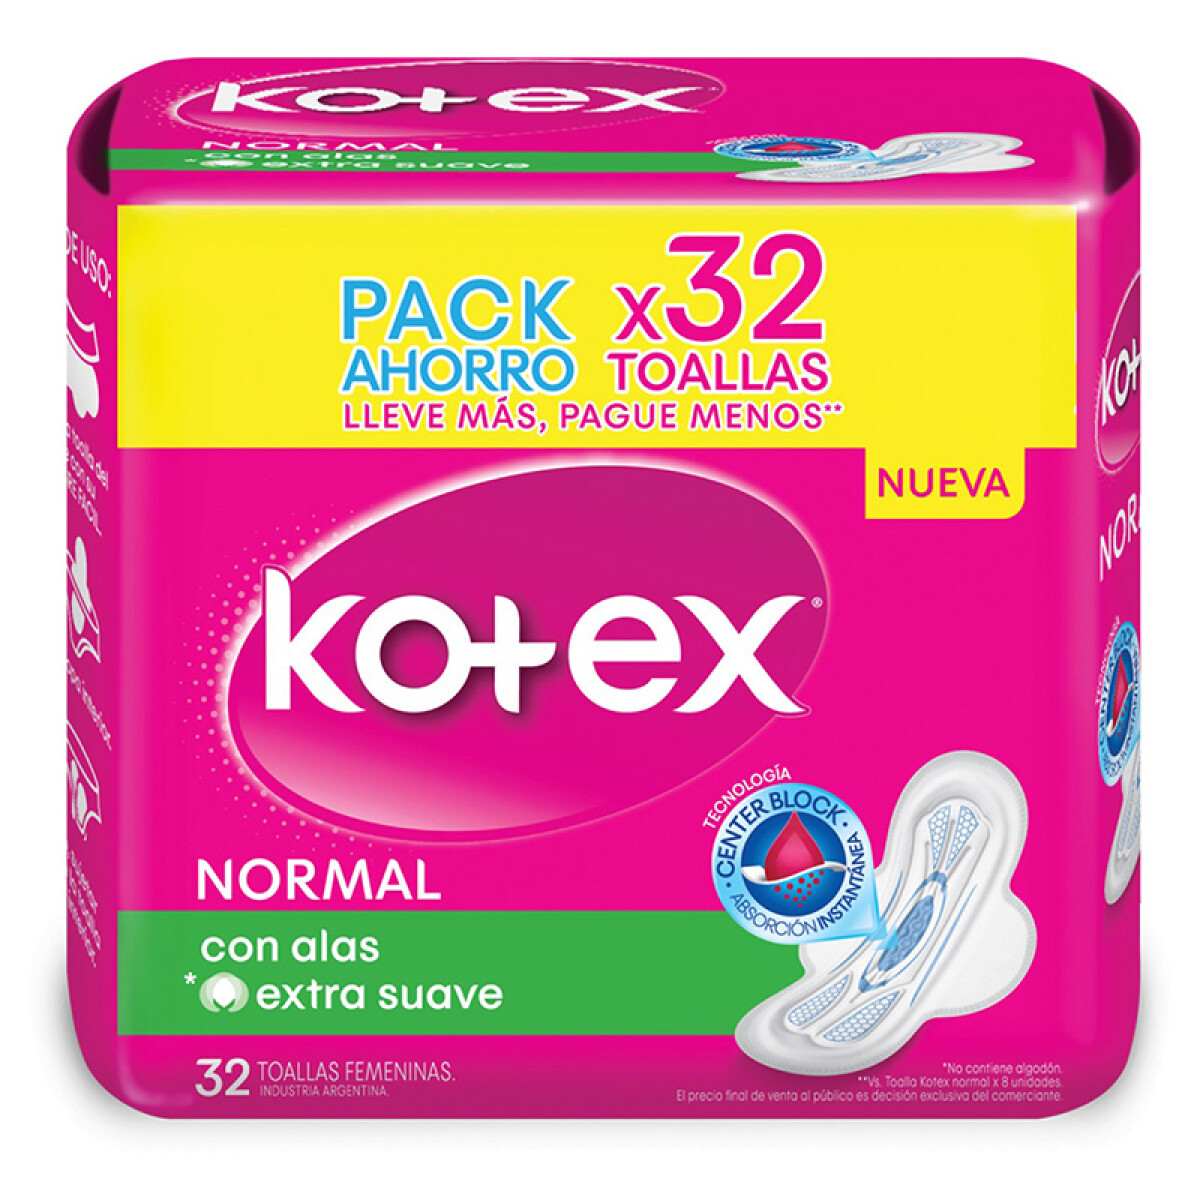 Kotex toallas femeninas - Normal c/alas x32 